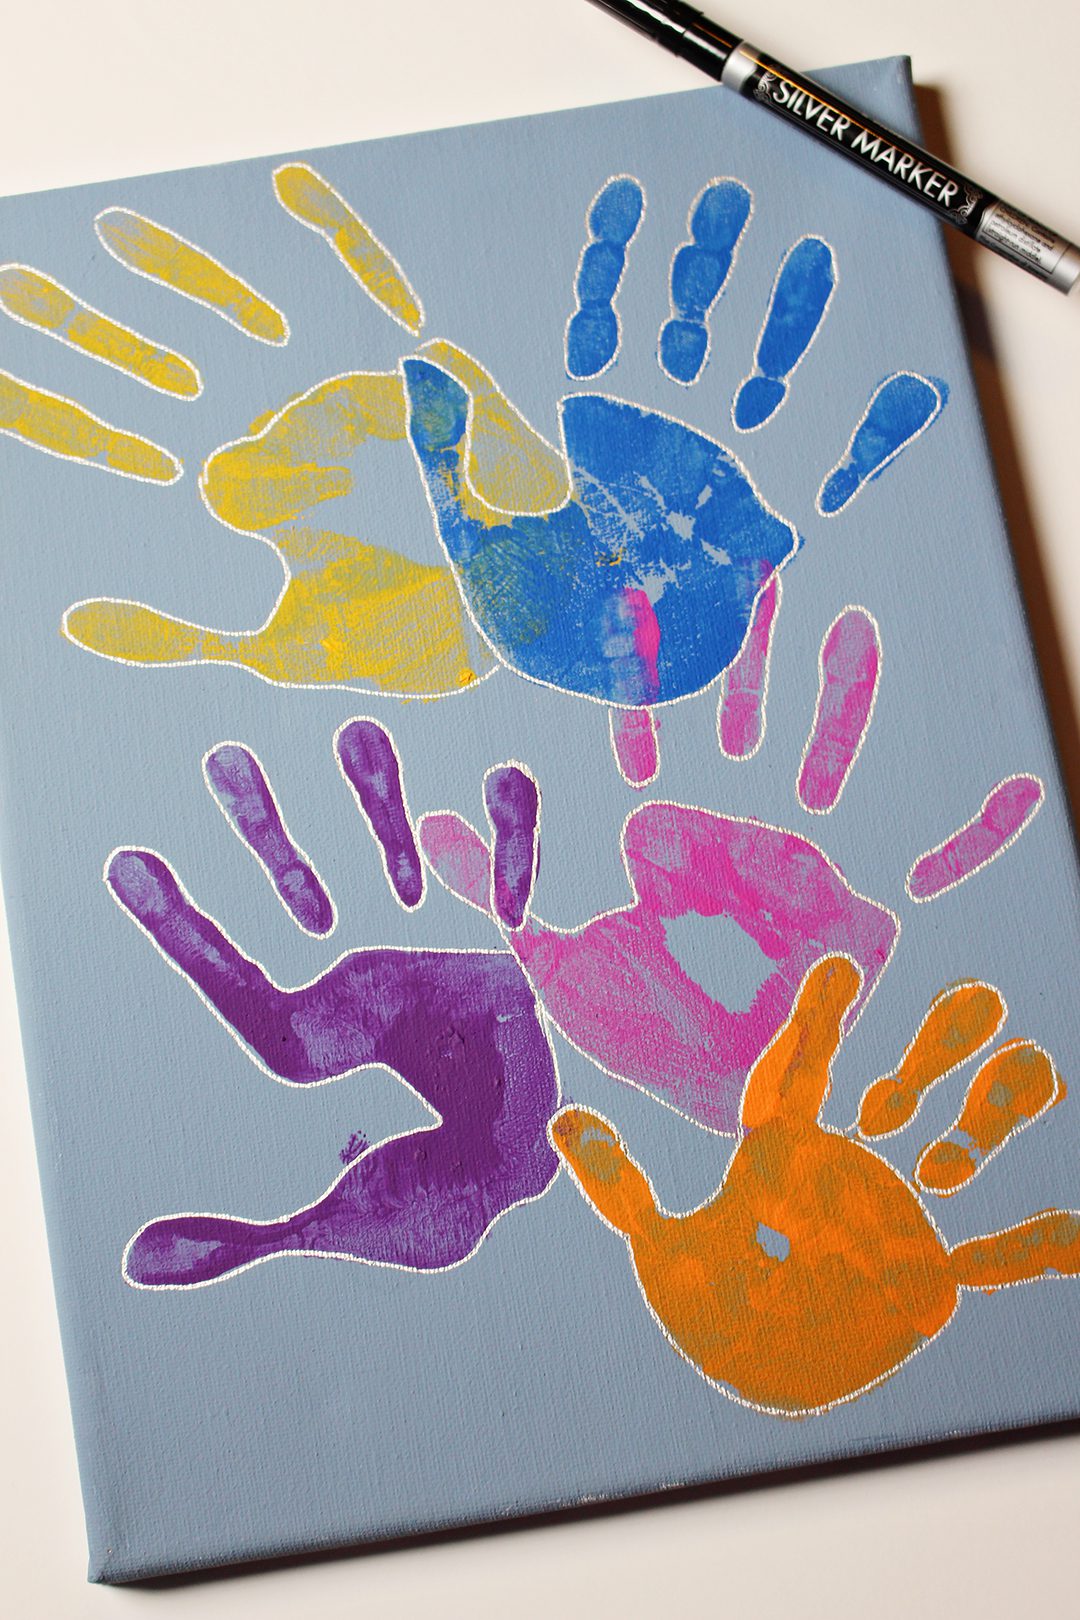 Painted children's handprints on a blue canvas.